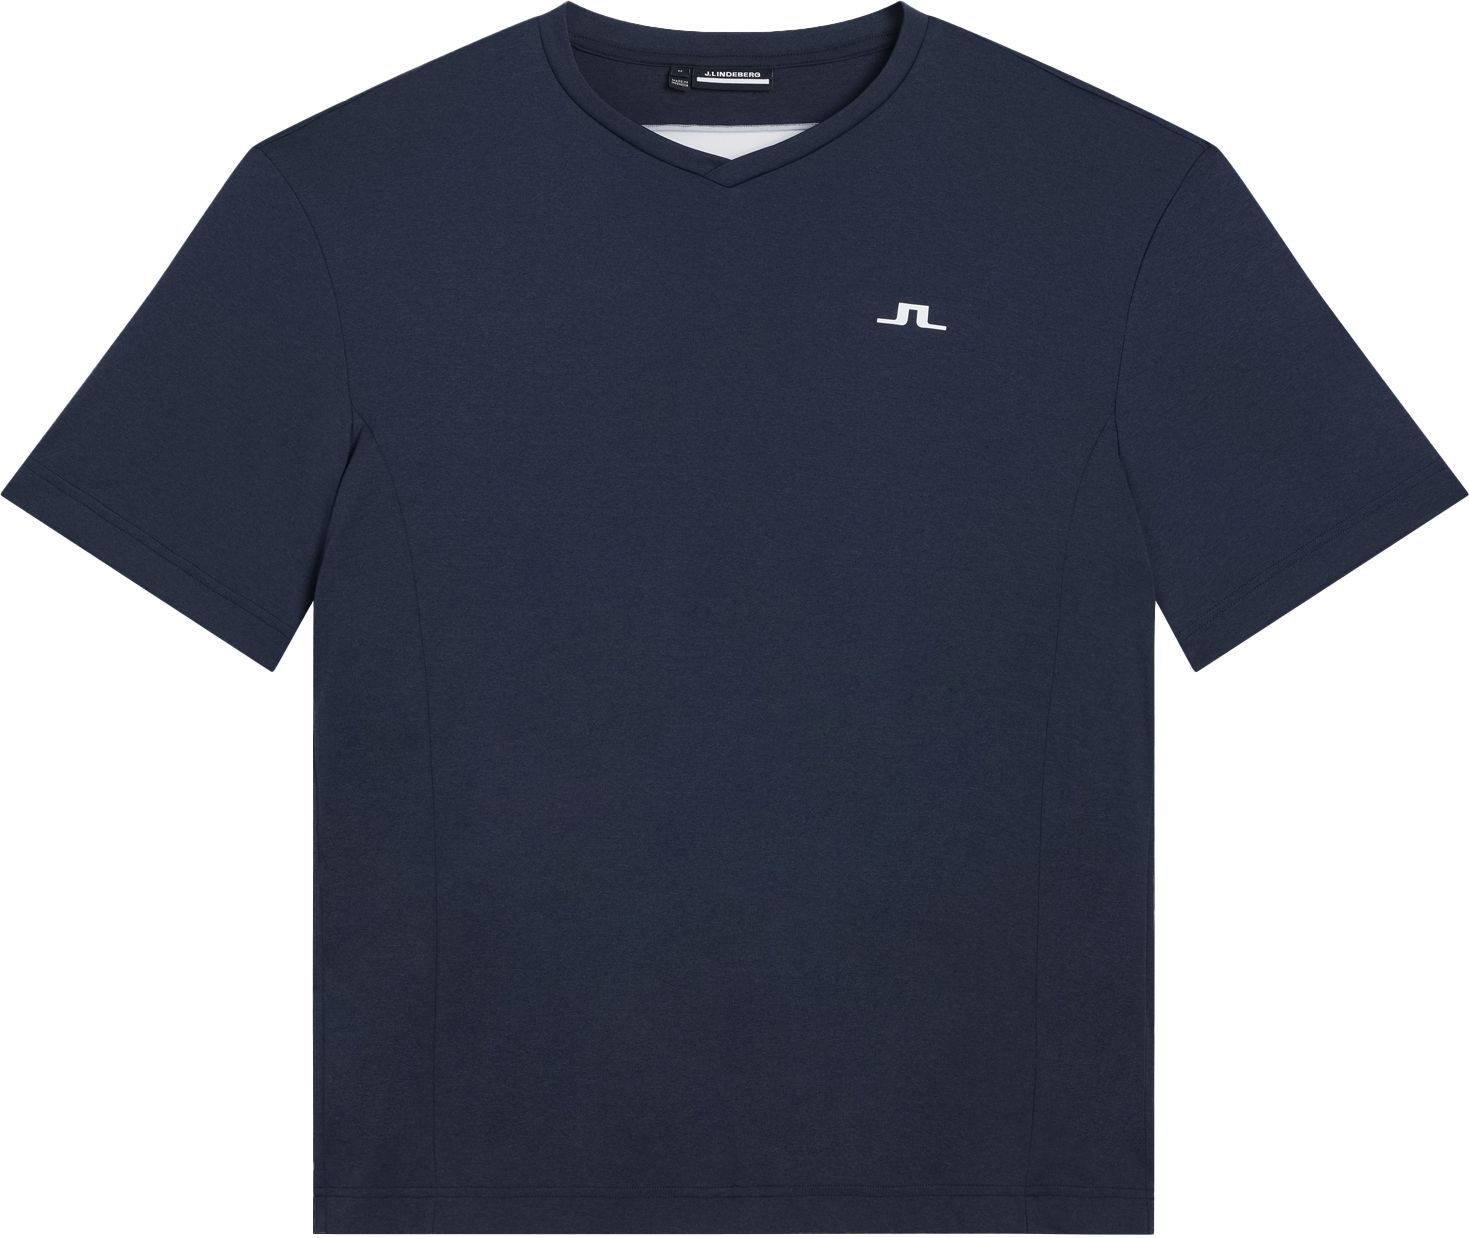 J LINDEBERG, Active T-shirt